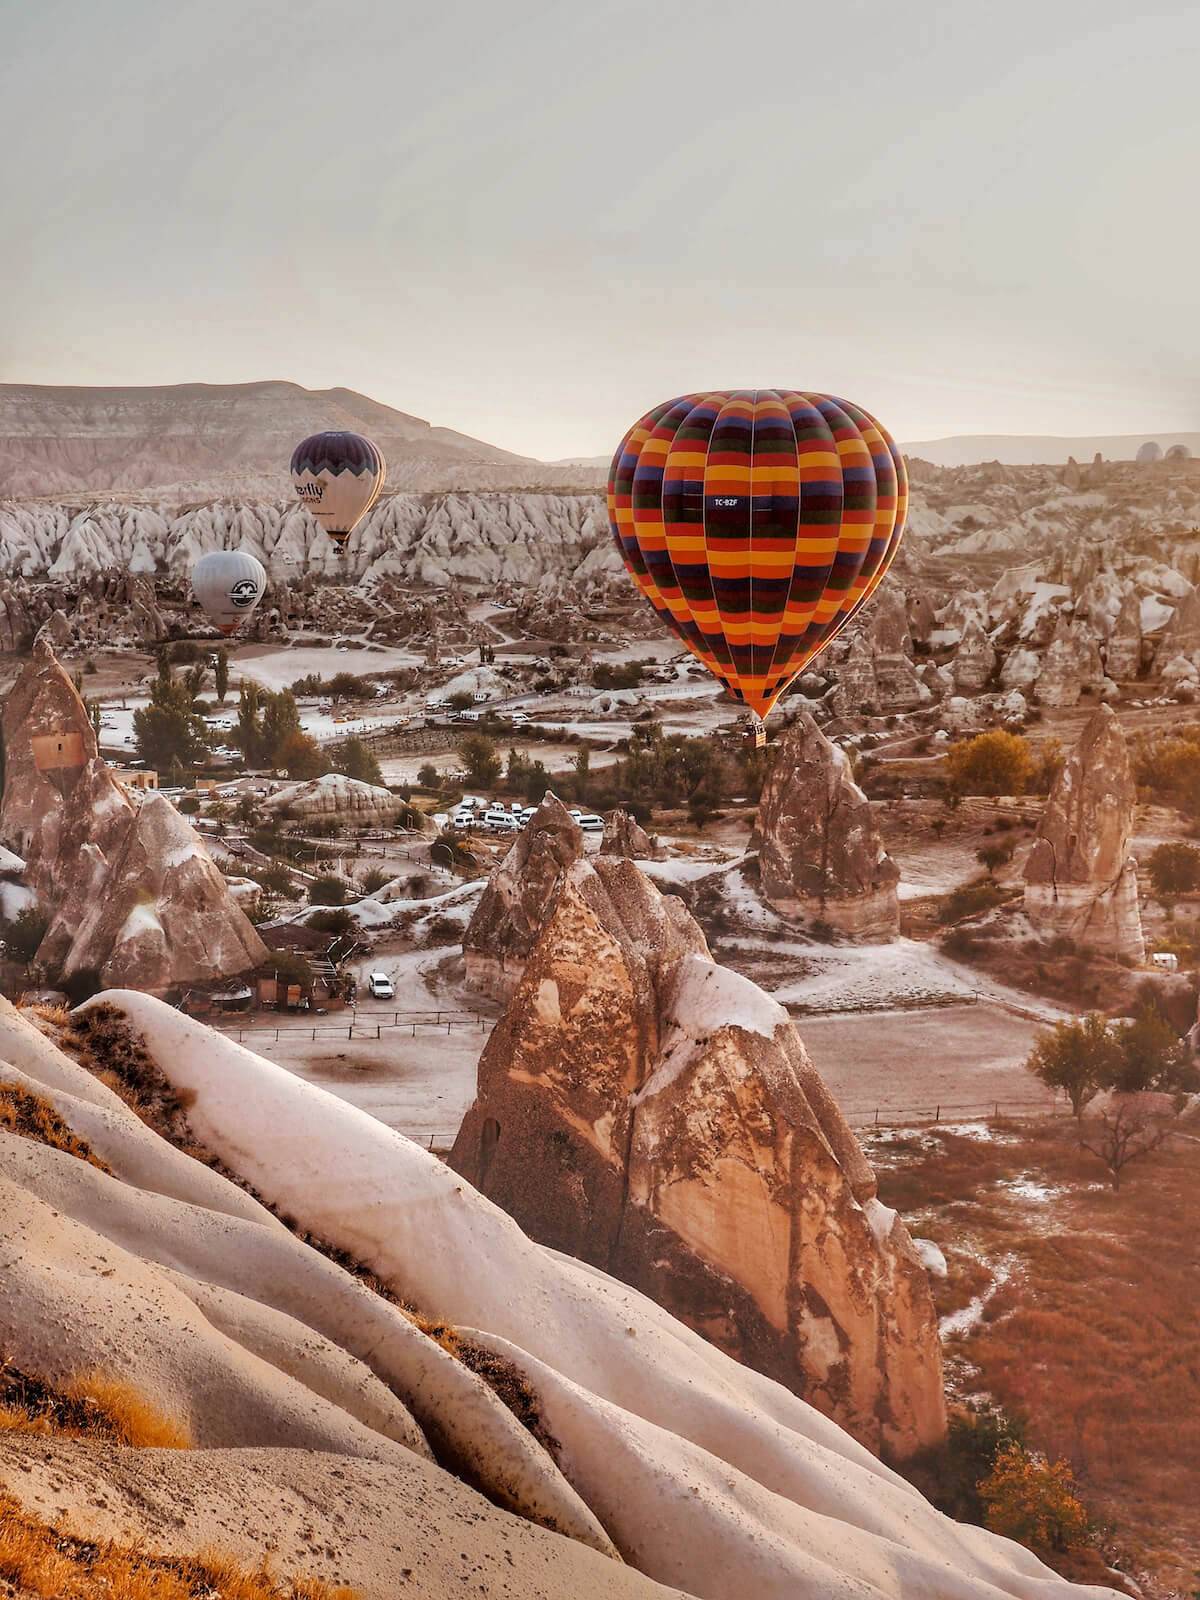 Where to watch hot air balloons in Cappadocia